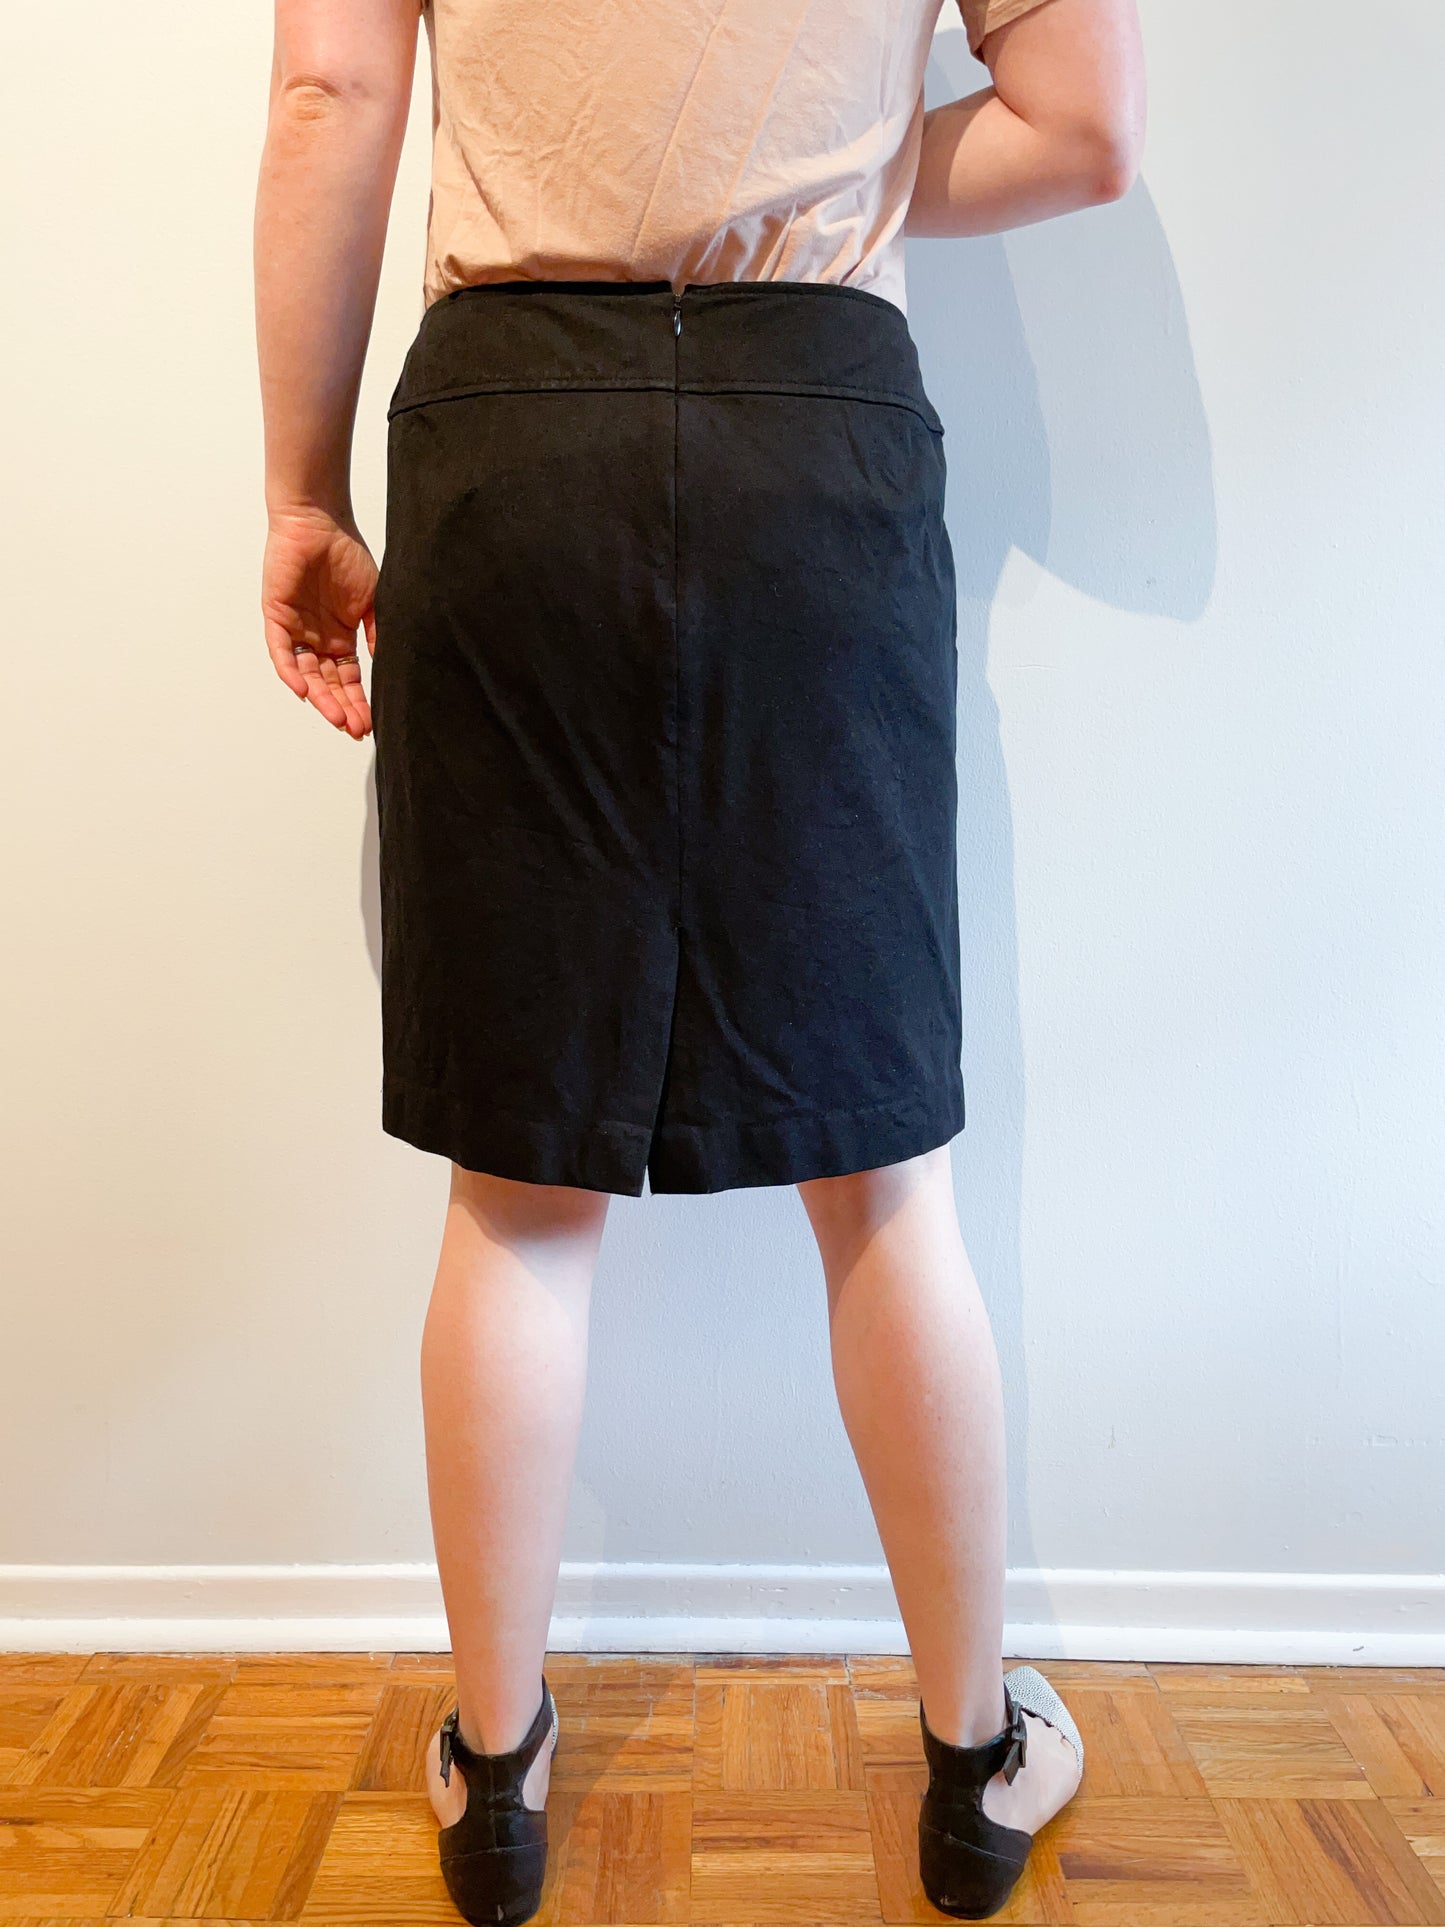 Banana Republic Black Stretch Skirt with Pockets - Size 10